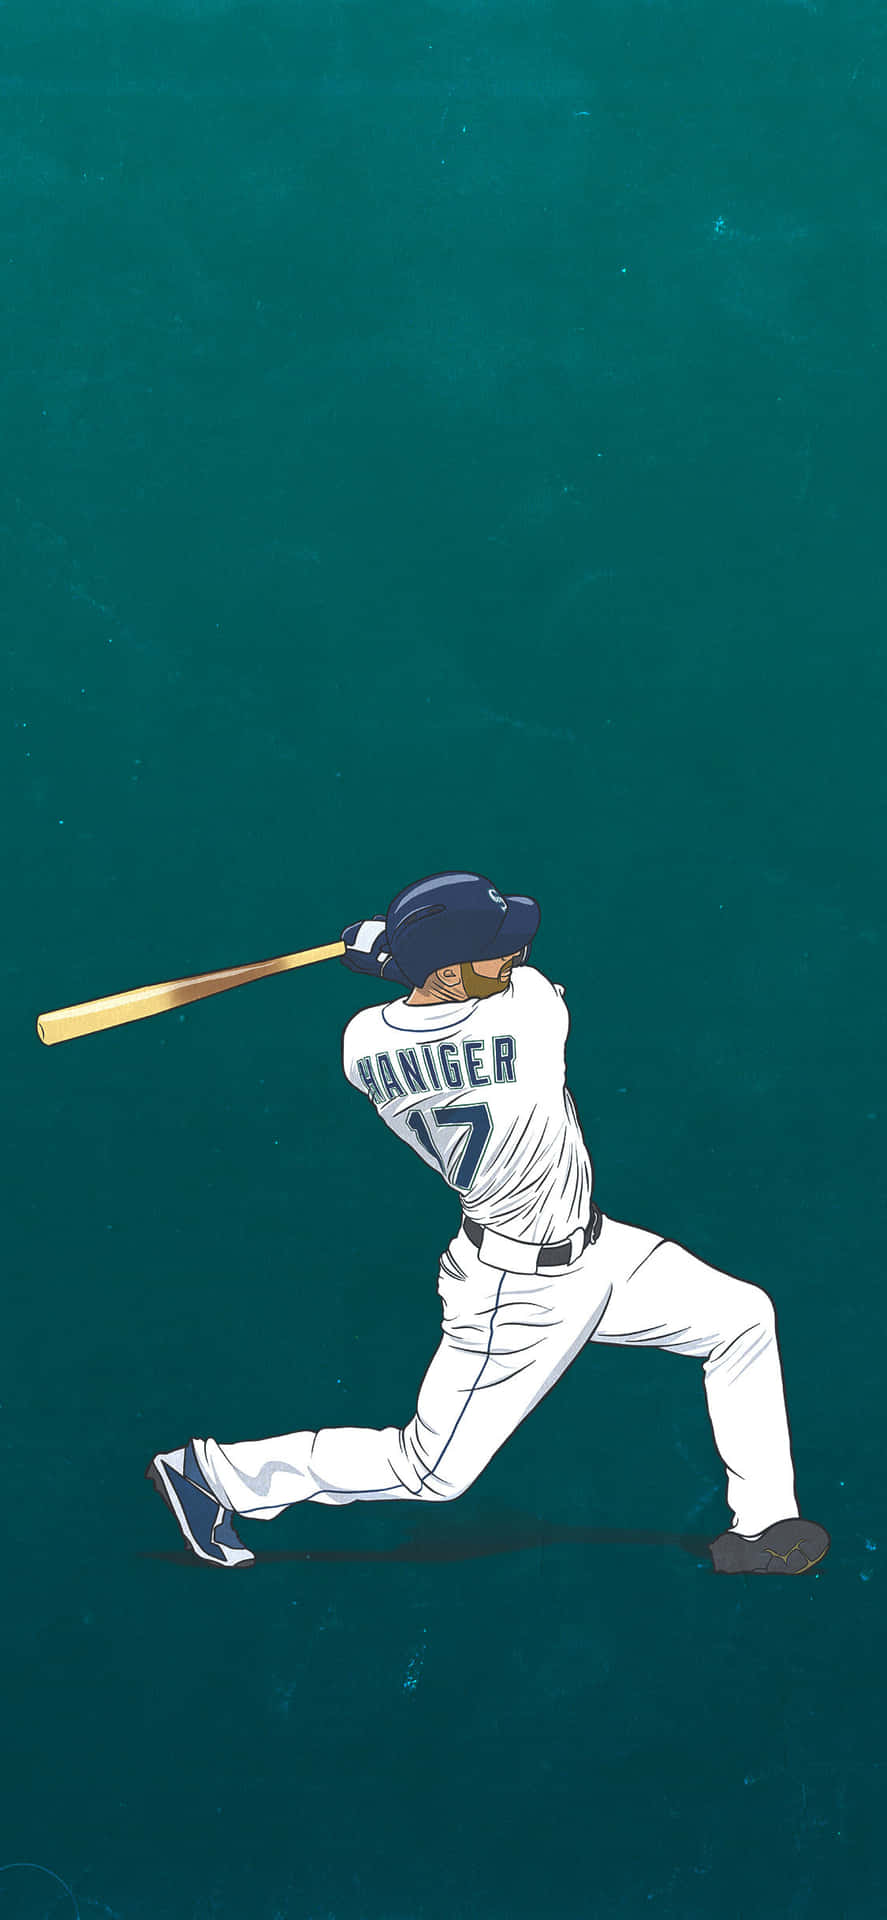 Baseball Swing Artistic Representation.jpg Wallpaper